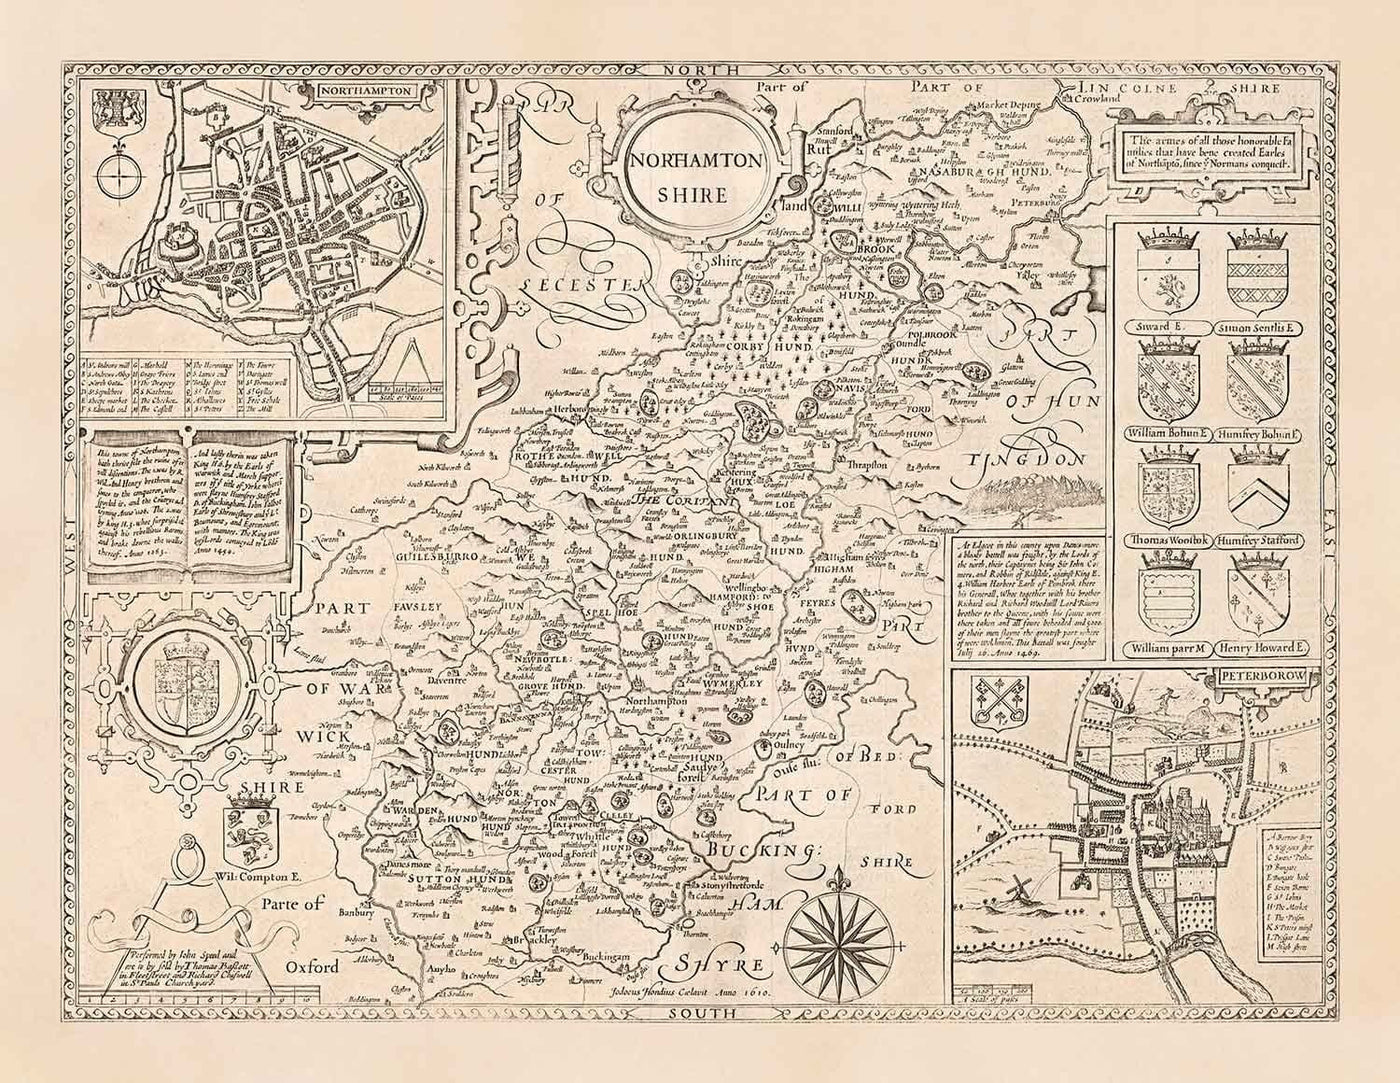 Alte monochrome Karte von Northamptonshire, 1611 von John Speed ​​- Northampton, Kettering, Peterborough, Corby, Stamford, Brackley